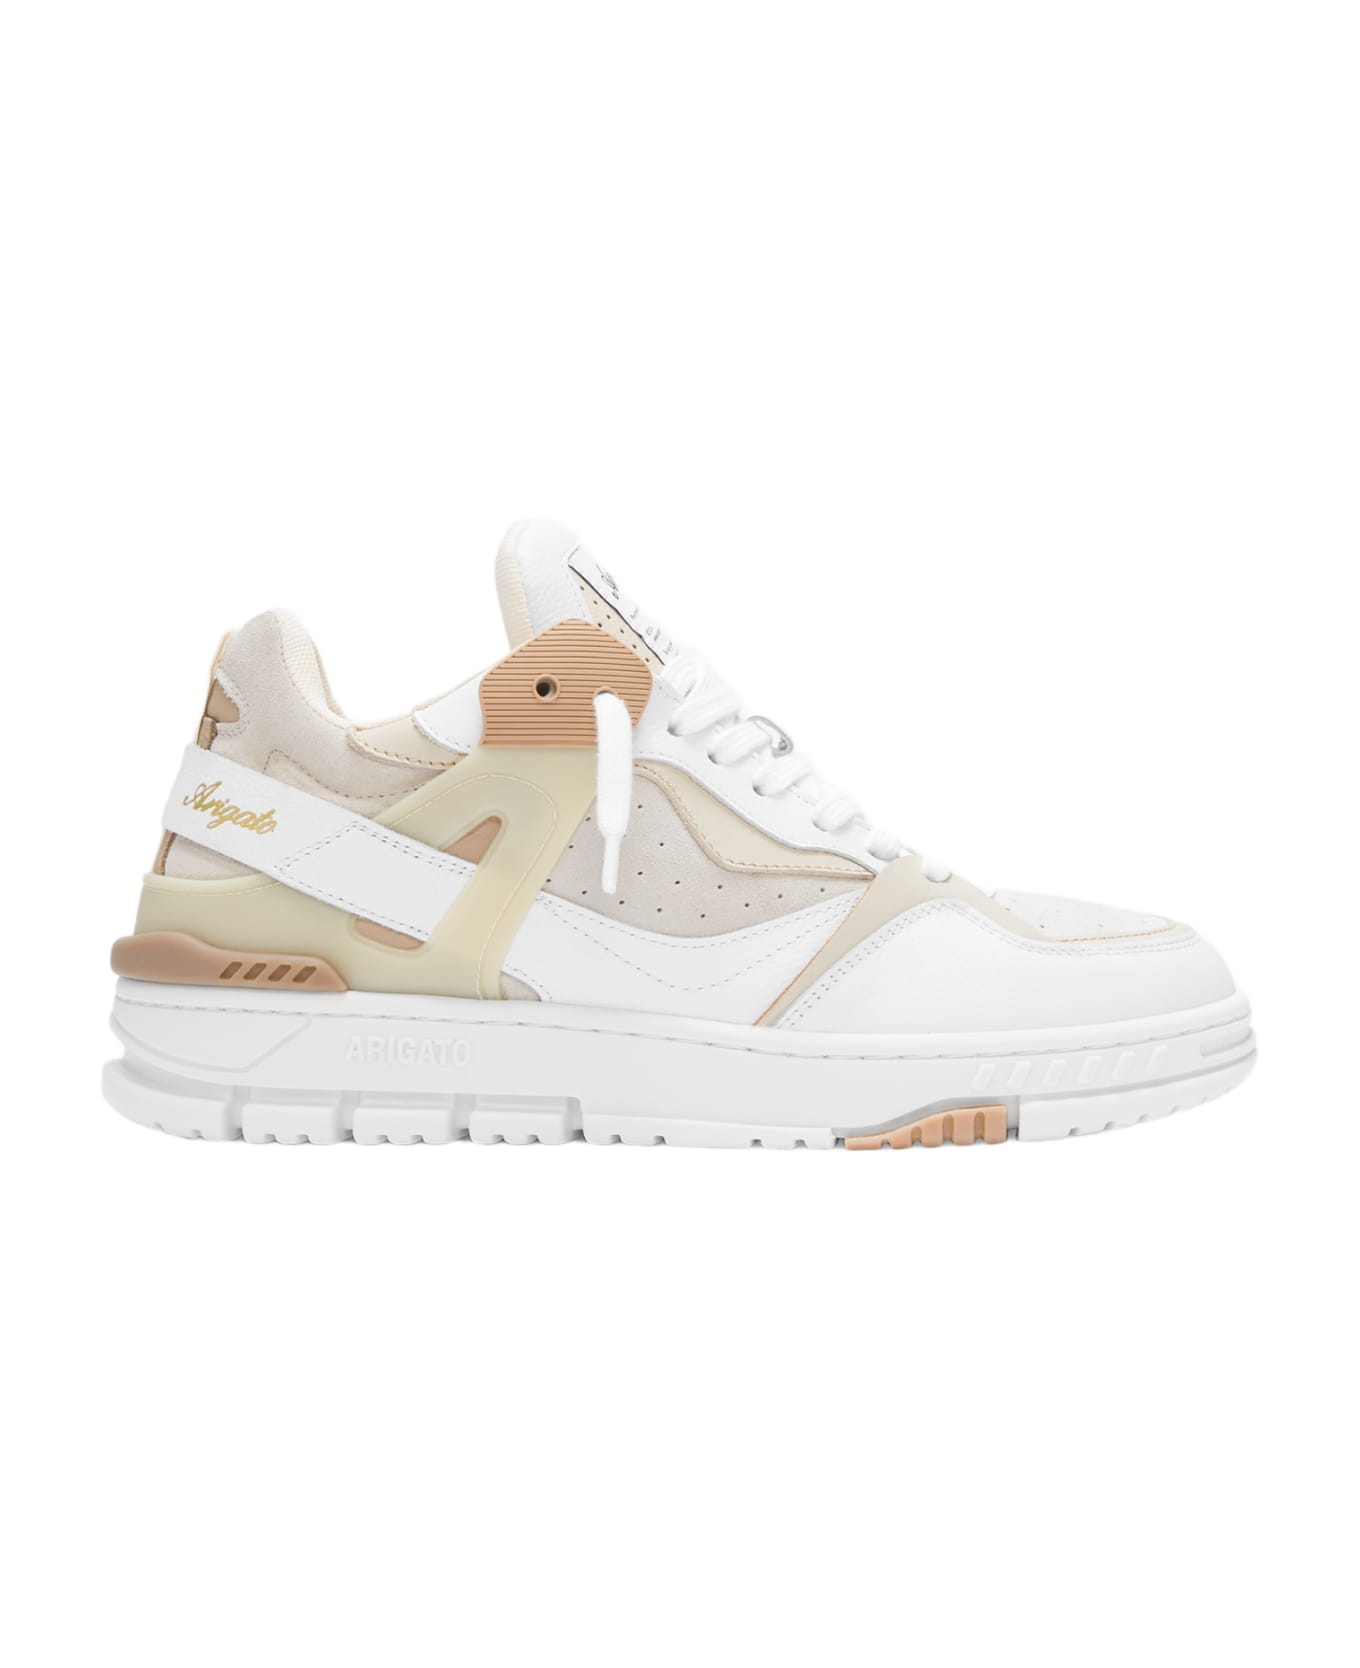 Axel Arigato Astro Sneaker White and beige leather 90s style low sneaker - Astro Sneaker - Bianco/beige